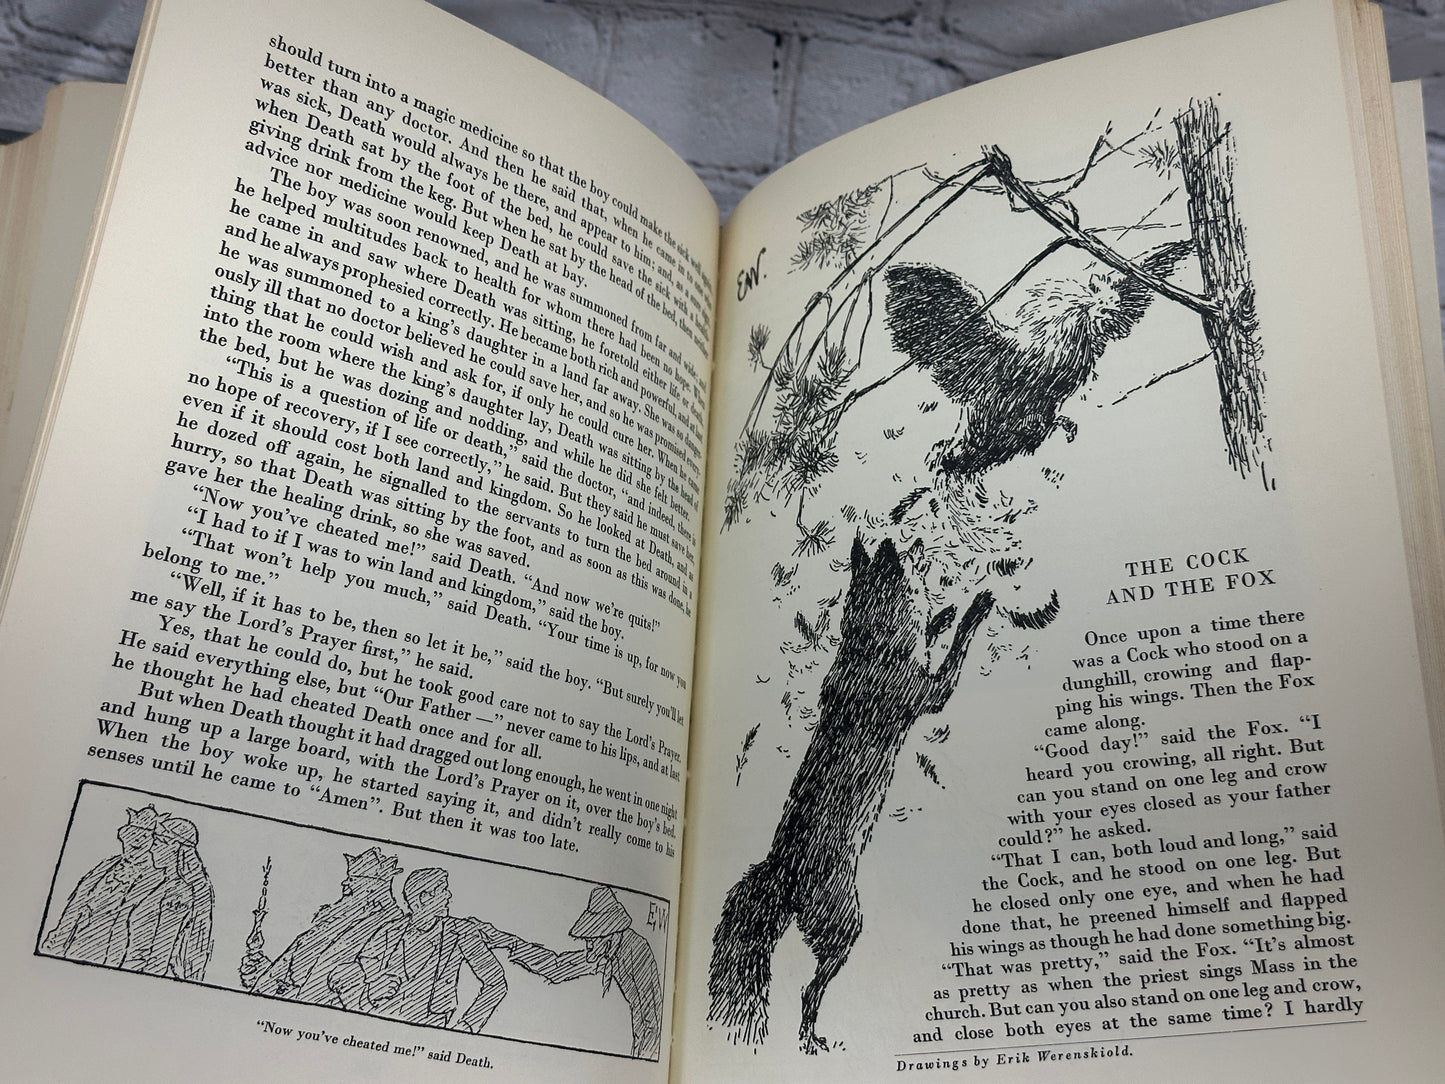 Norwegian Folk Tales from the Collection of Peter Asbjornsen & Jorgen Moe [1960]